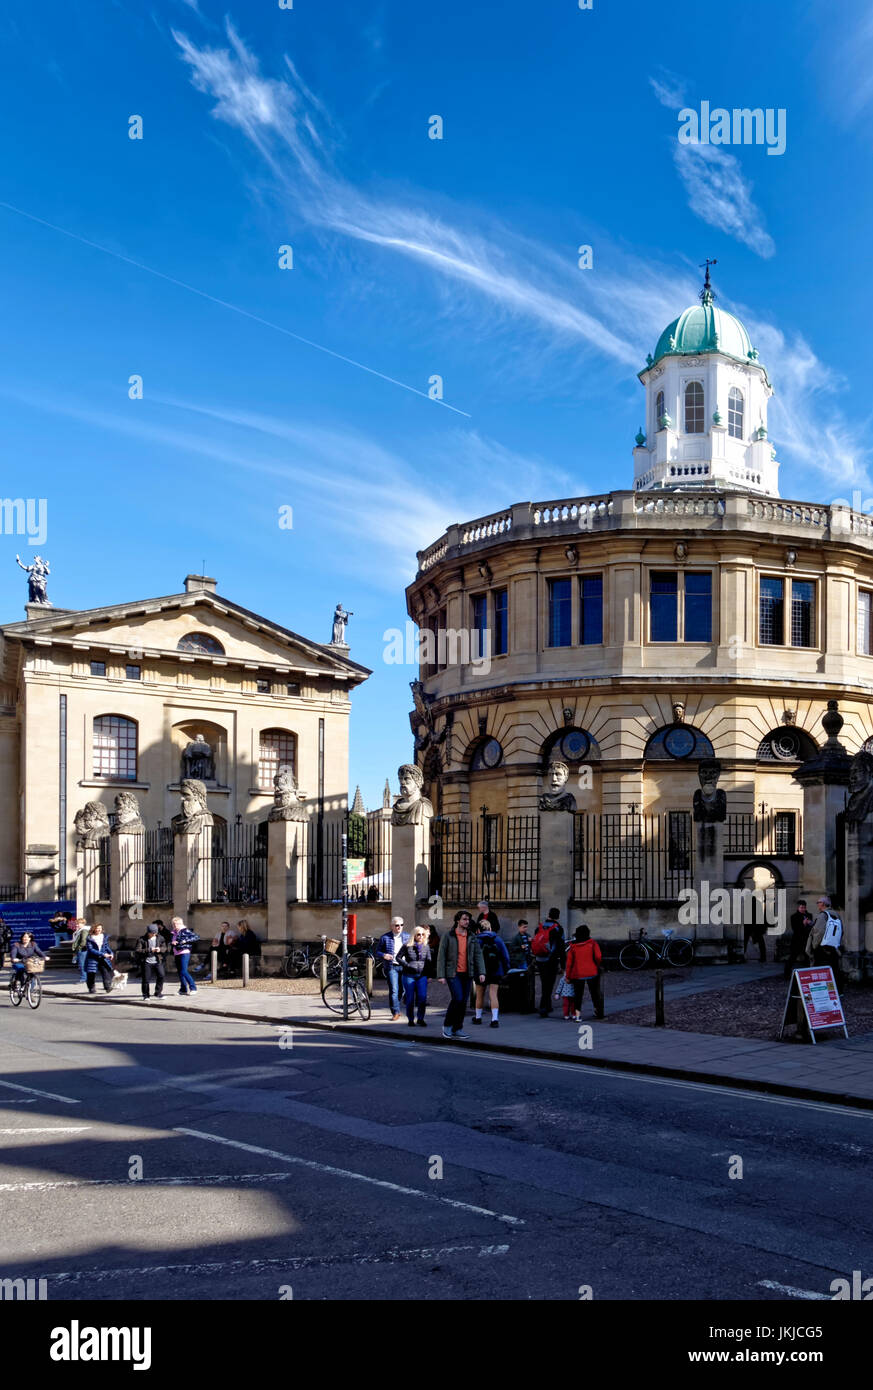 The Sheldonian Theatre, Broad Street, Oxford, United Kingdom. Stock Photo